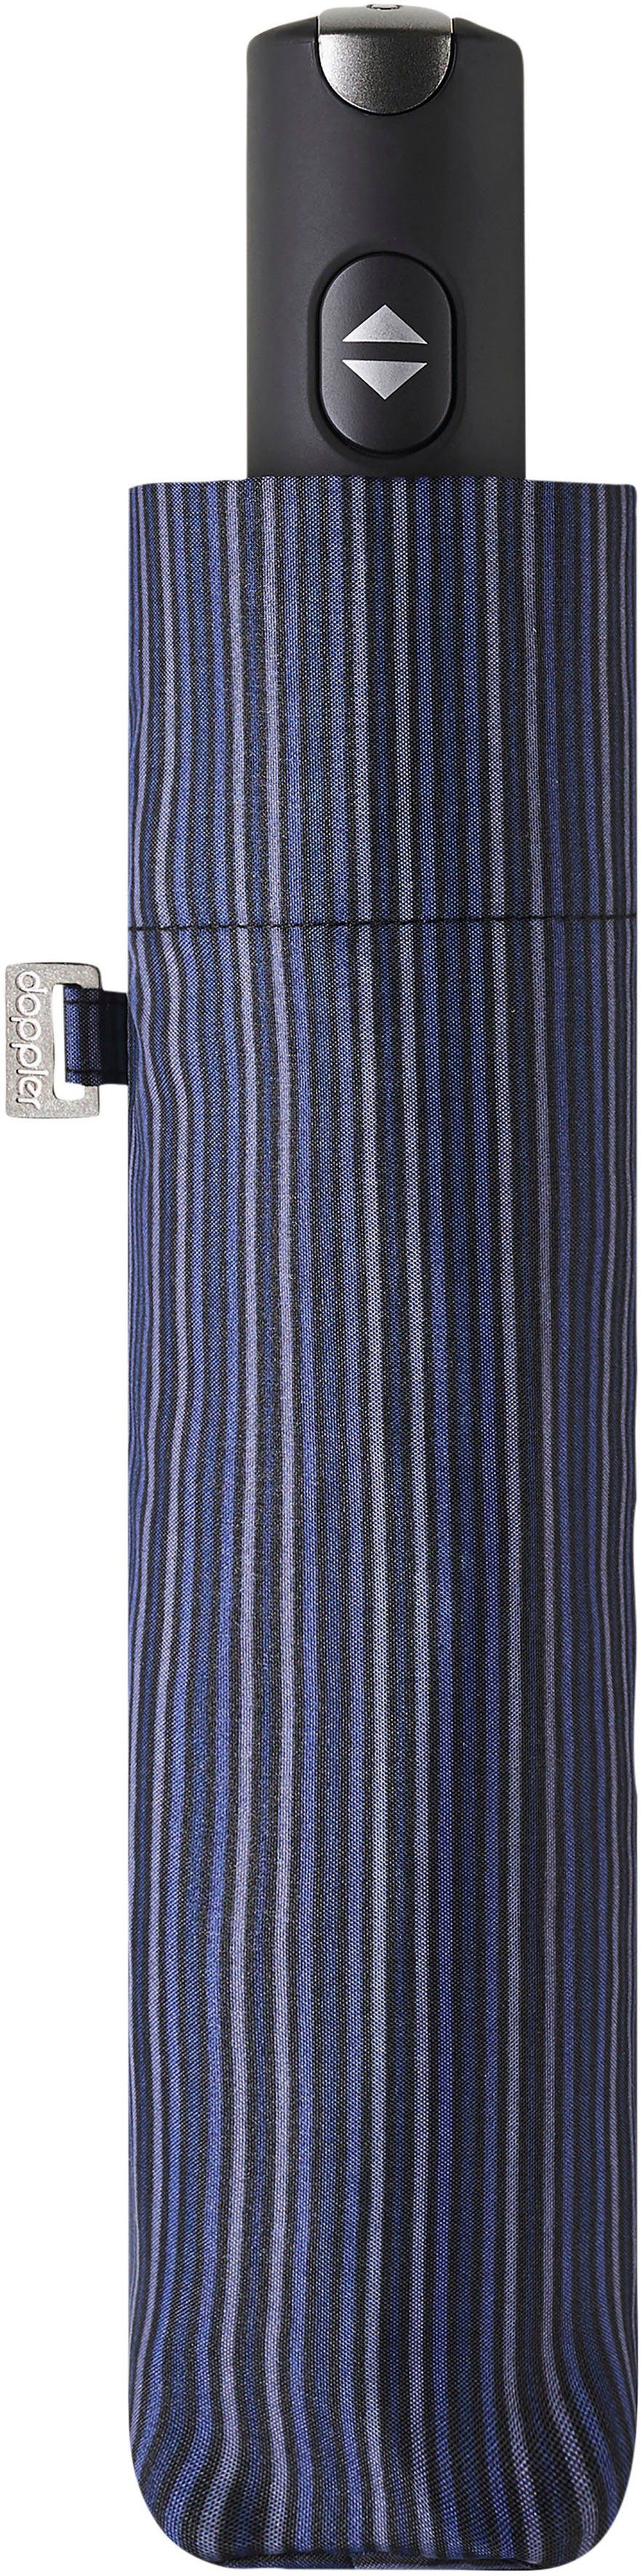 Carbonsteel Taschenregenschirm doppler® shades/blue Magic,